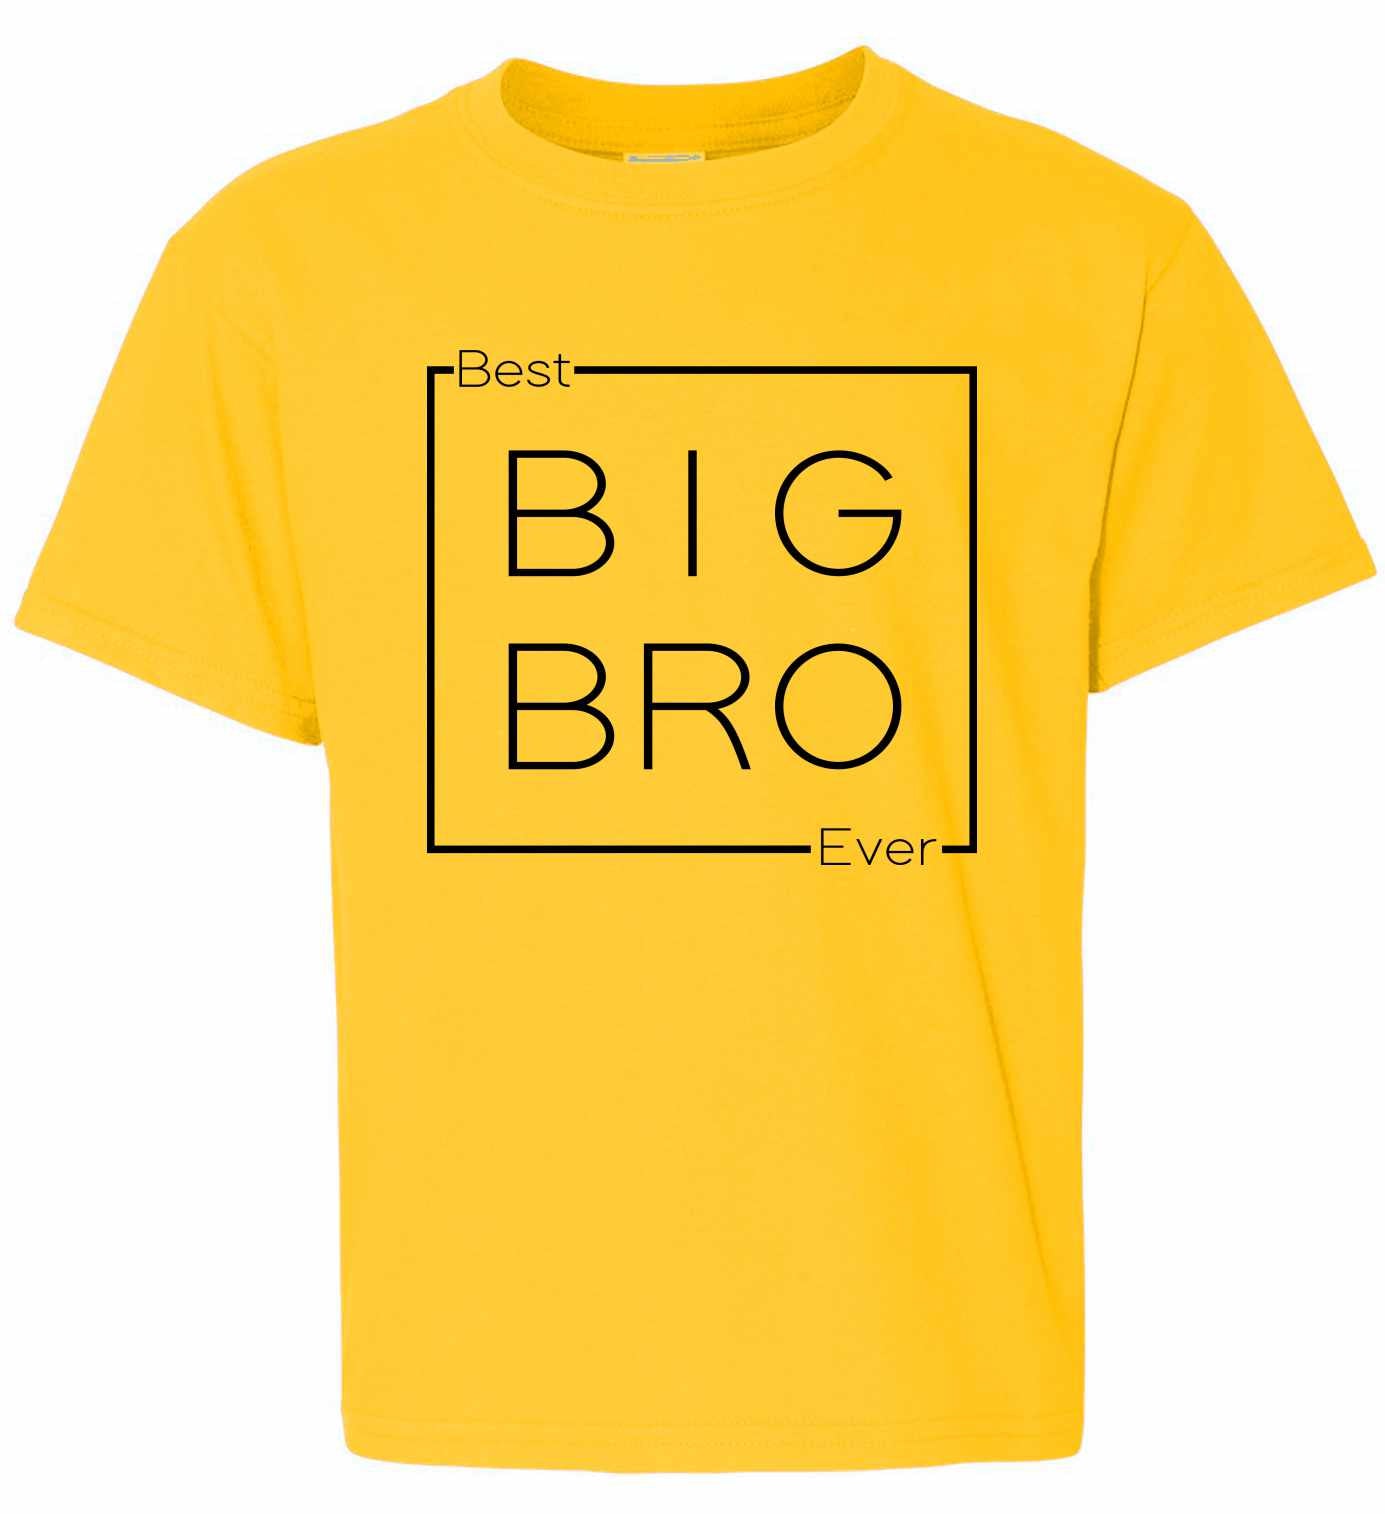 Best Big Bro Ever - Big Brother - Box on Kids T-Shirt